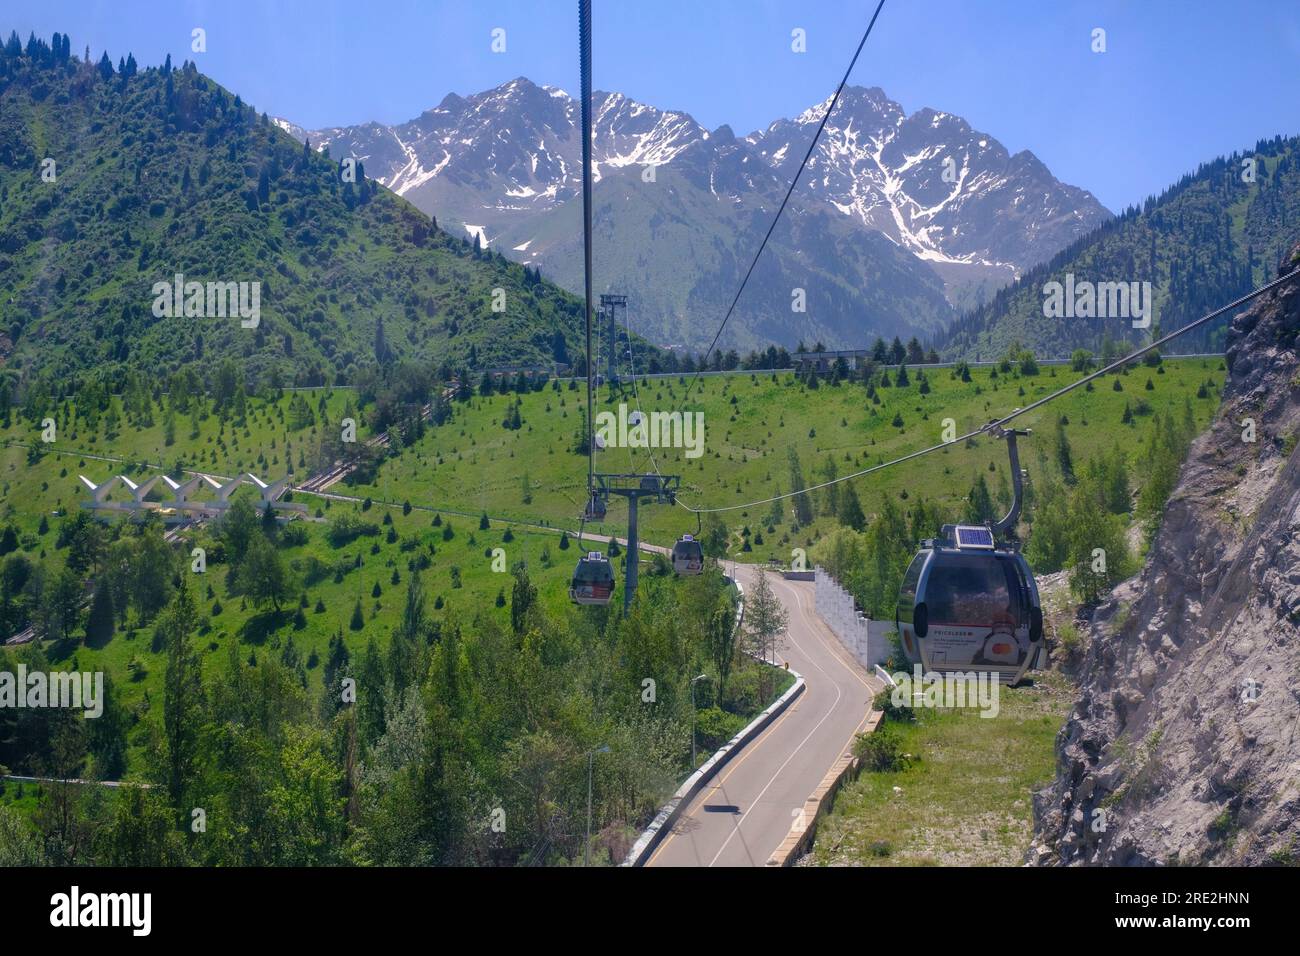 Kazakhstan, Almaty. Shymbulak Funicular Gondola to Skiing Area. Stock Photo